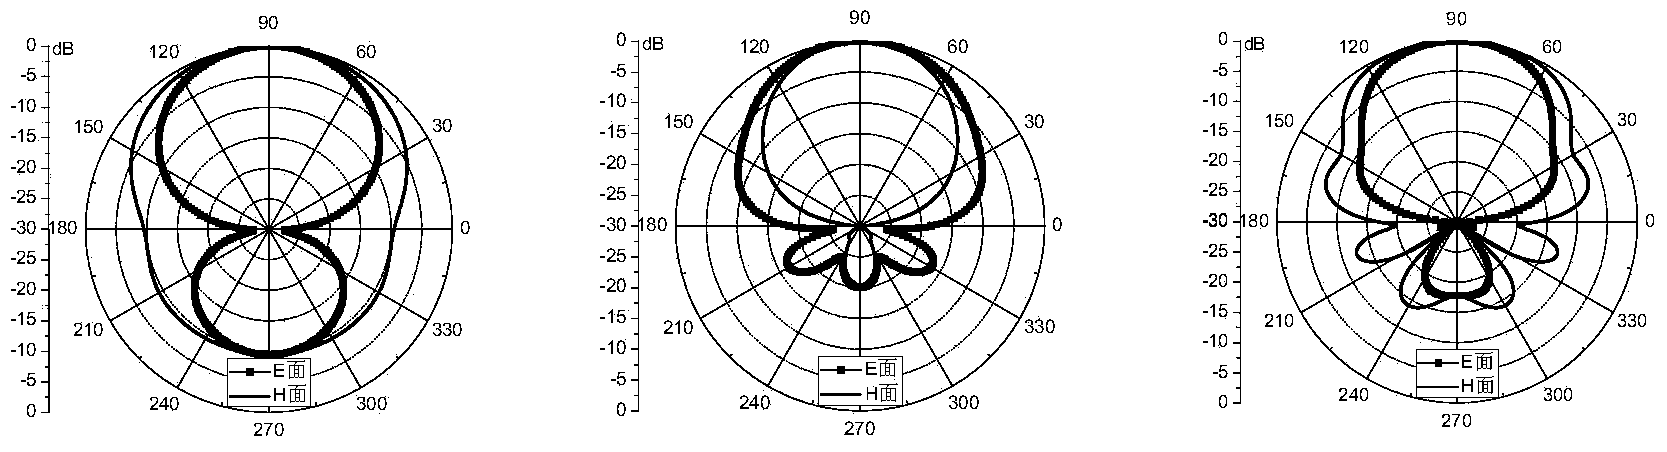 Non-cross-feeding log-periodic antenna